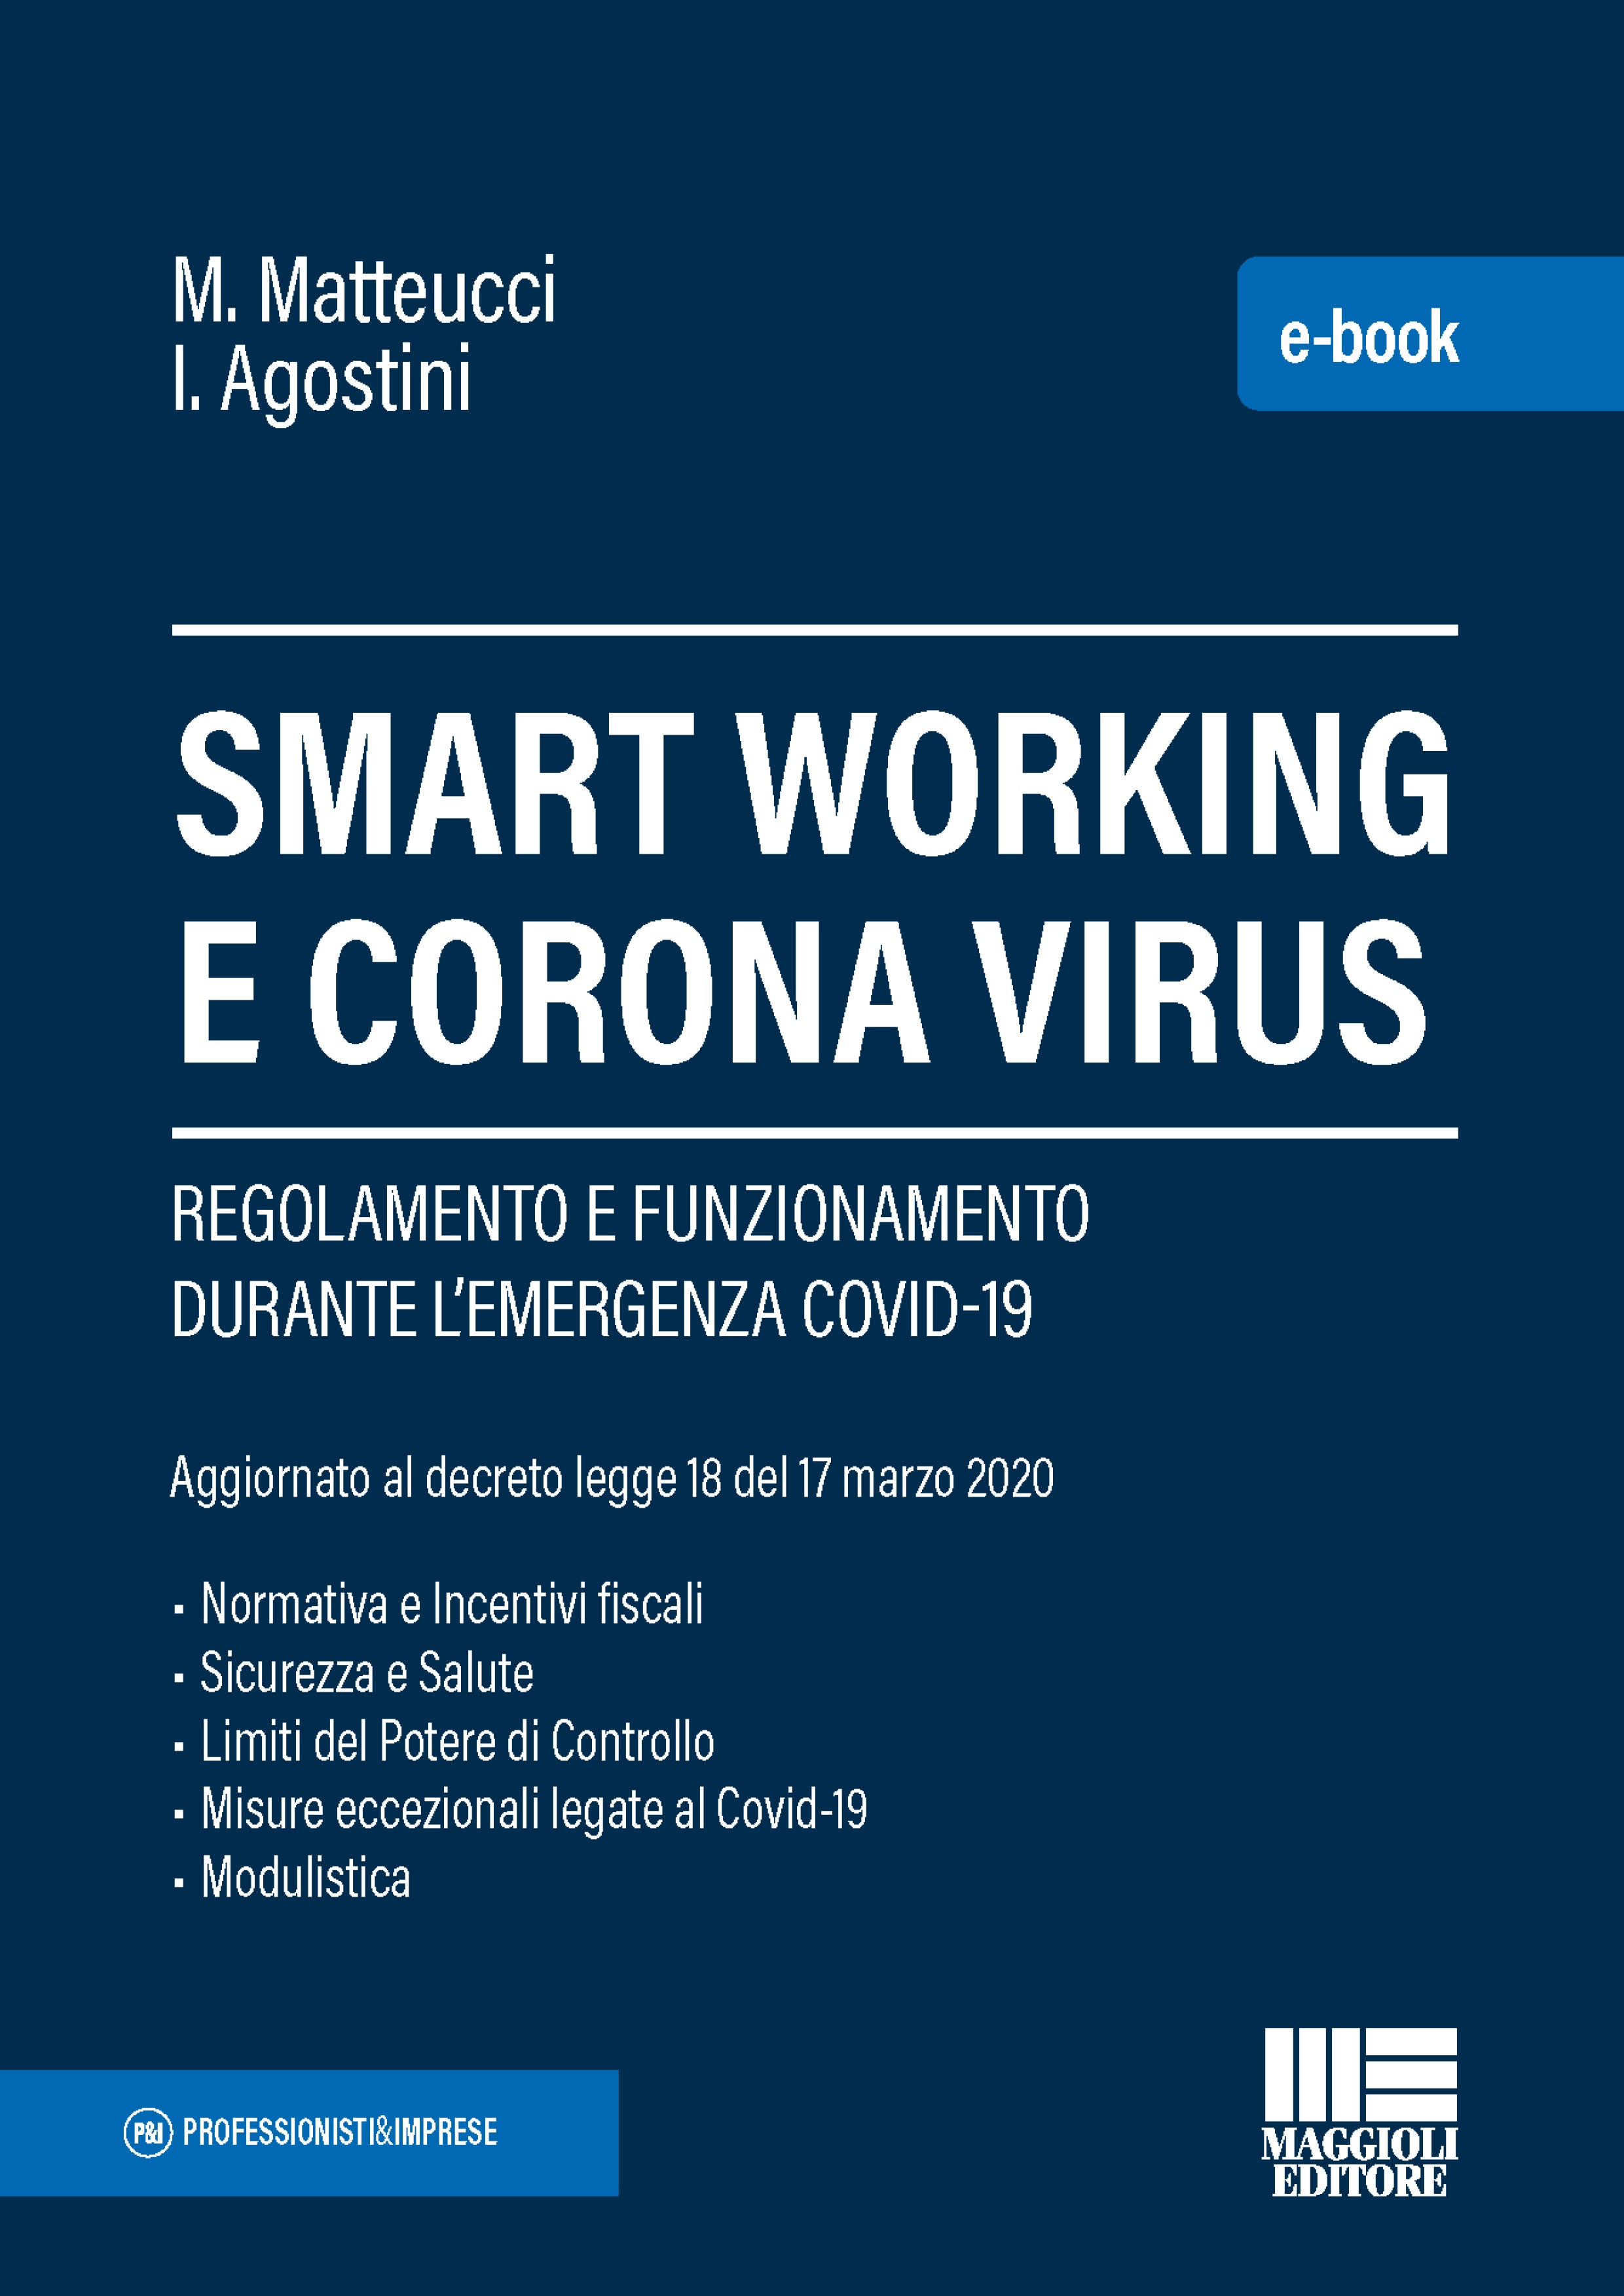 SMART WORKING E CORONA VIRUS